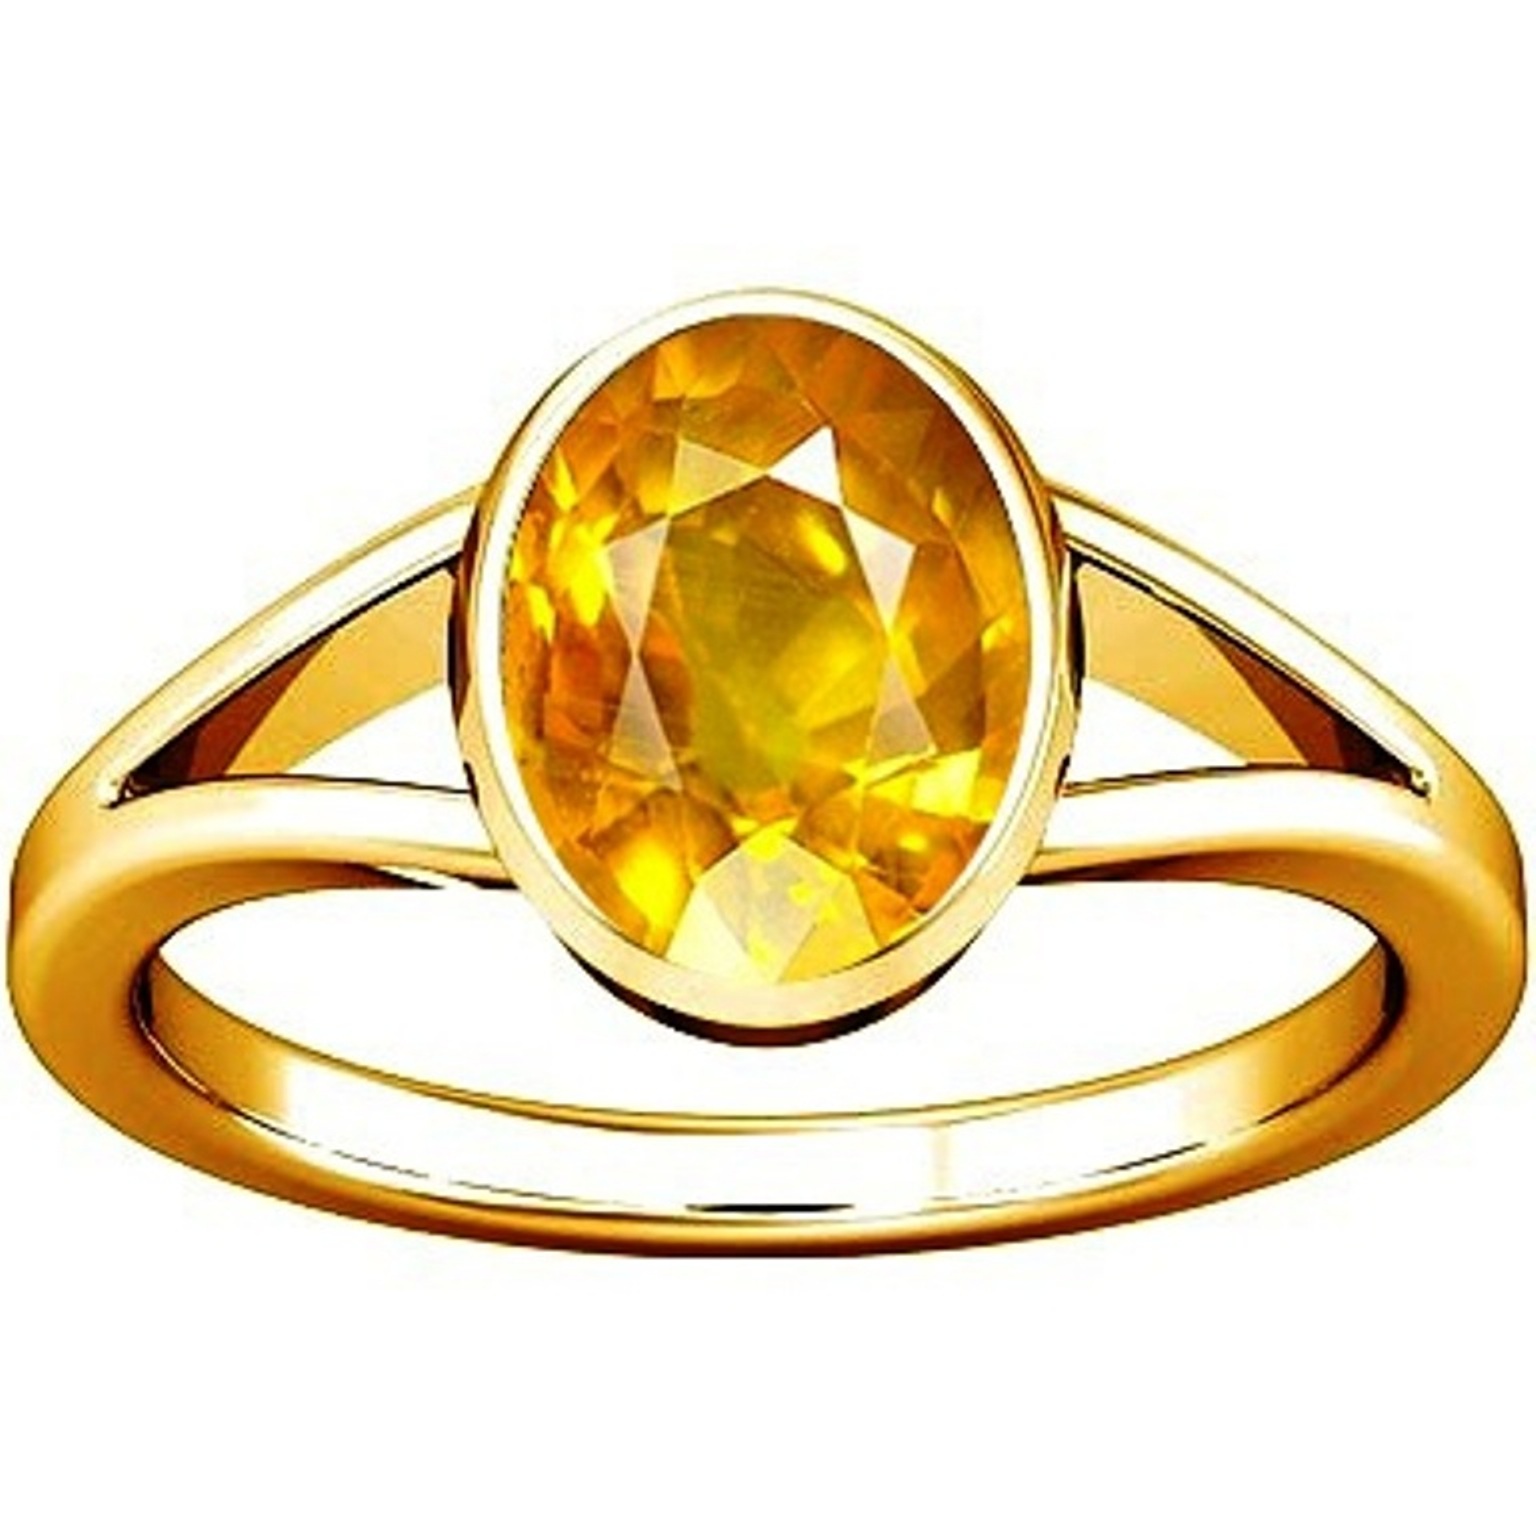 YELLOW SAPPHIRE RING Pukhraj Gemstone Gold Plated Ring Yellow Sapphire/ Pukhraj Panchdhatu Ring (10.25 Carat) For